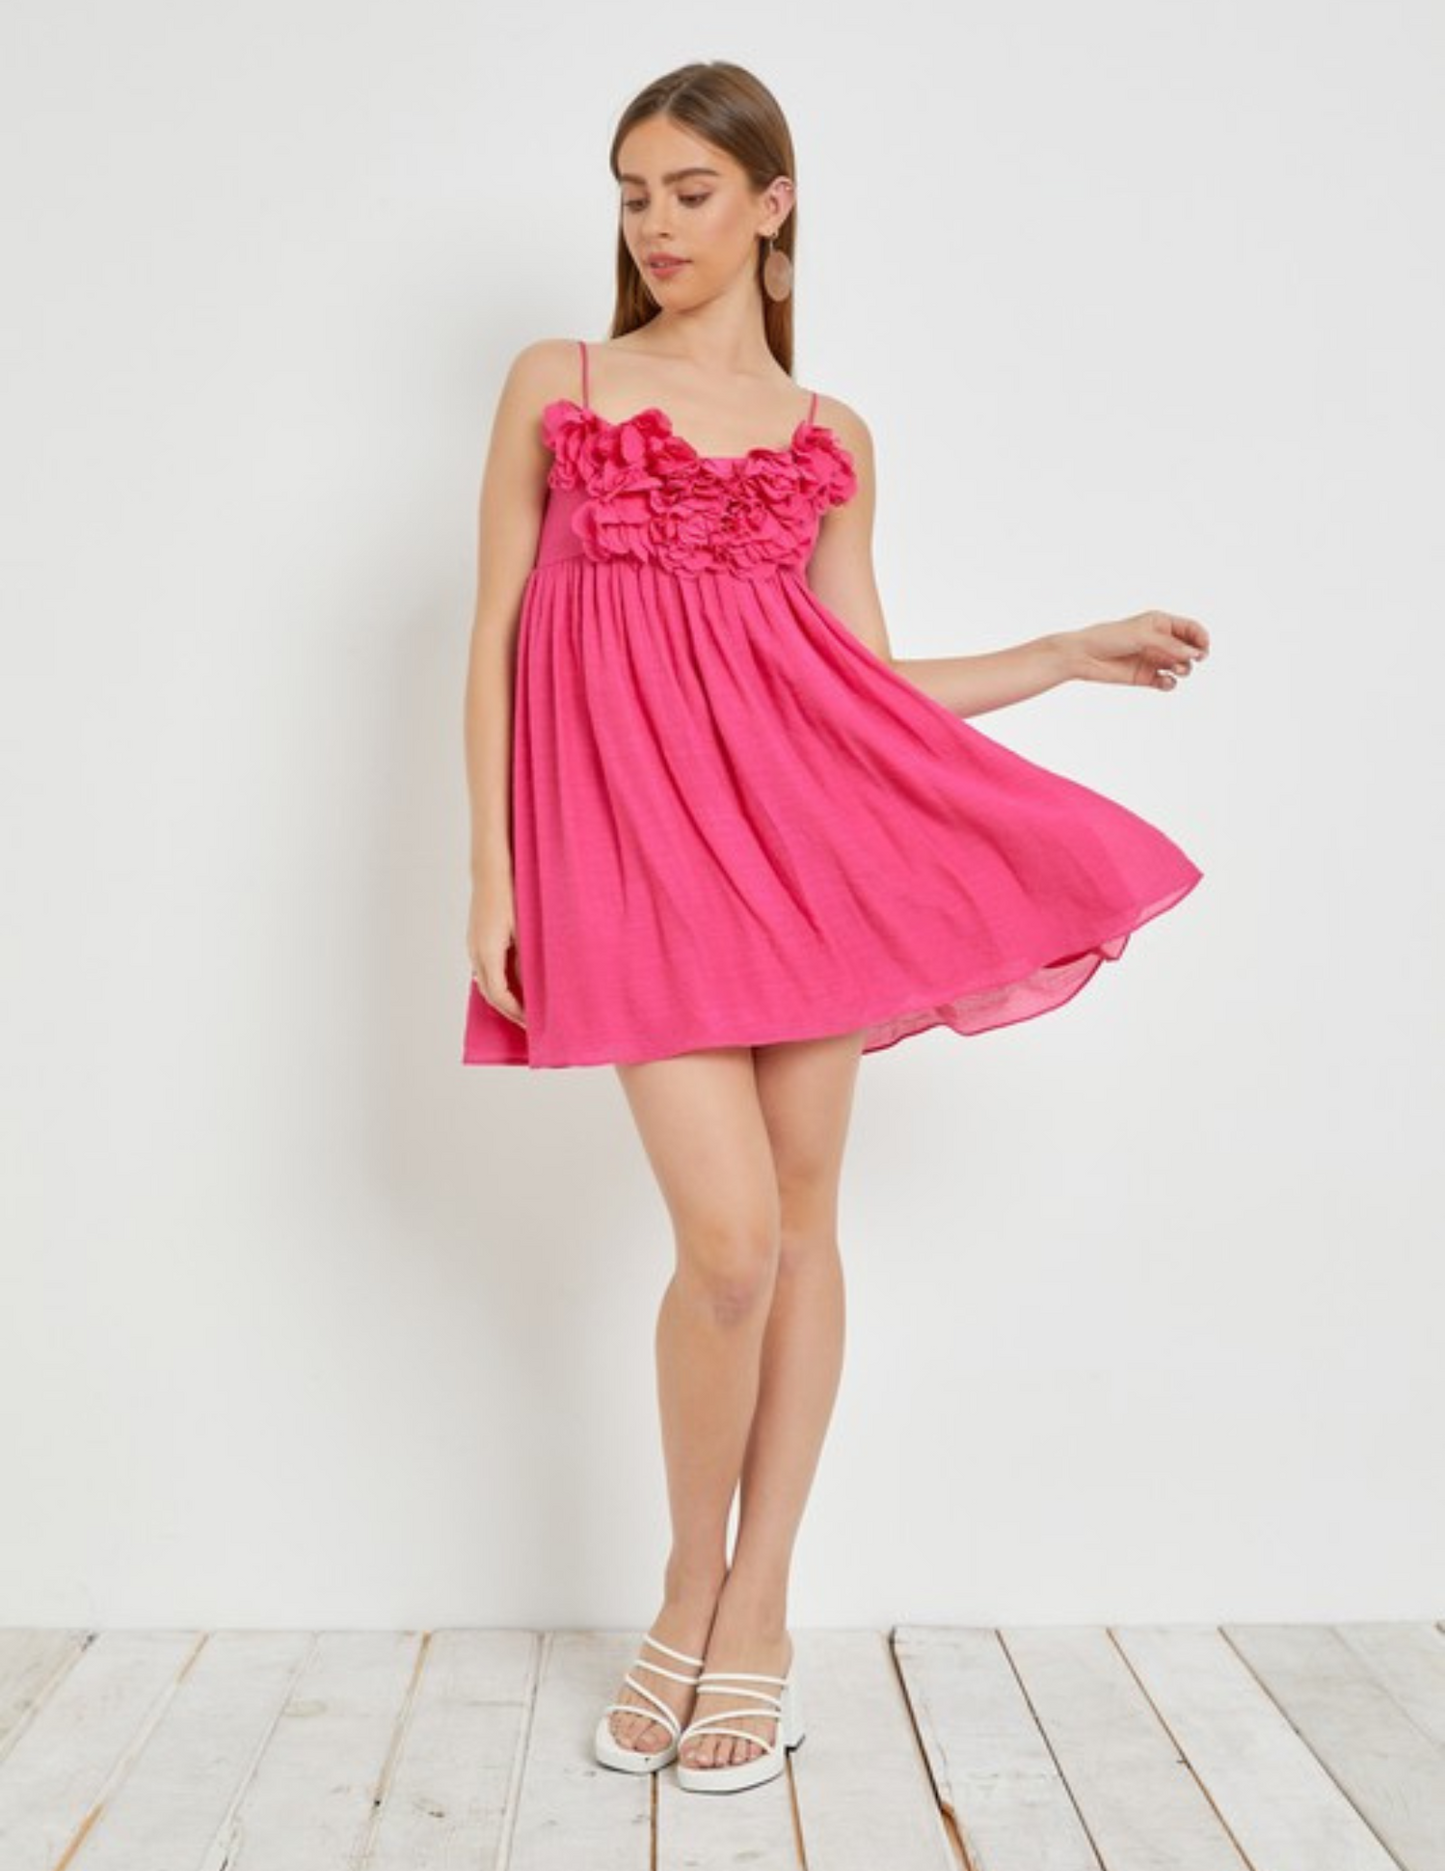 Rose Dreams Mini Dress - hot pink new